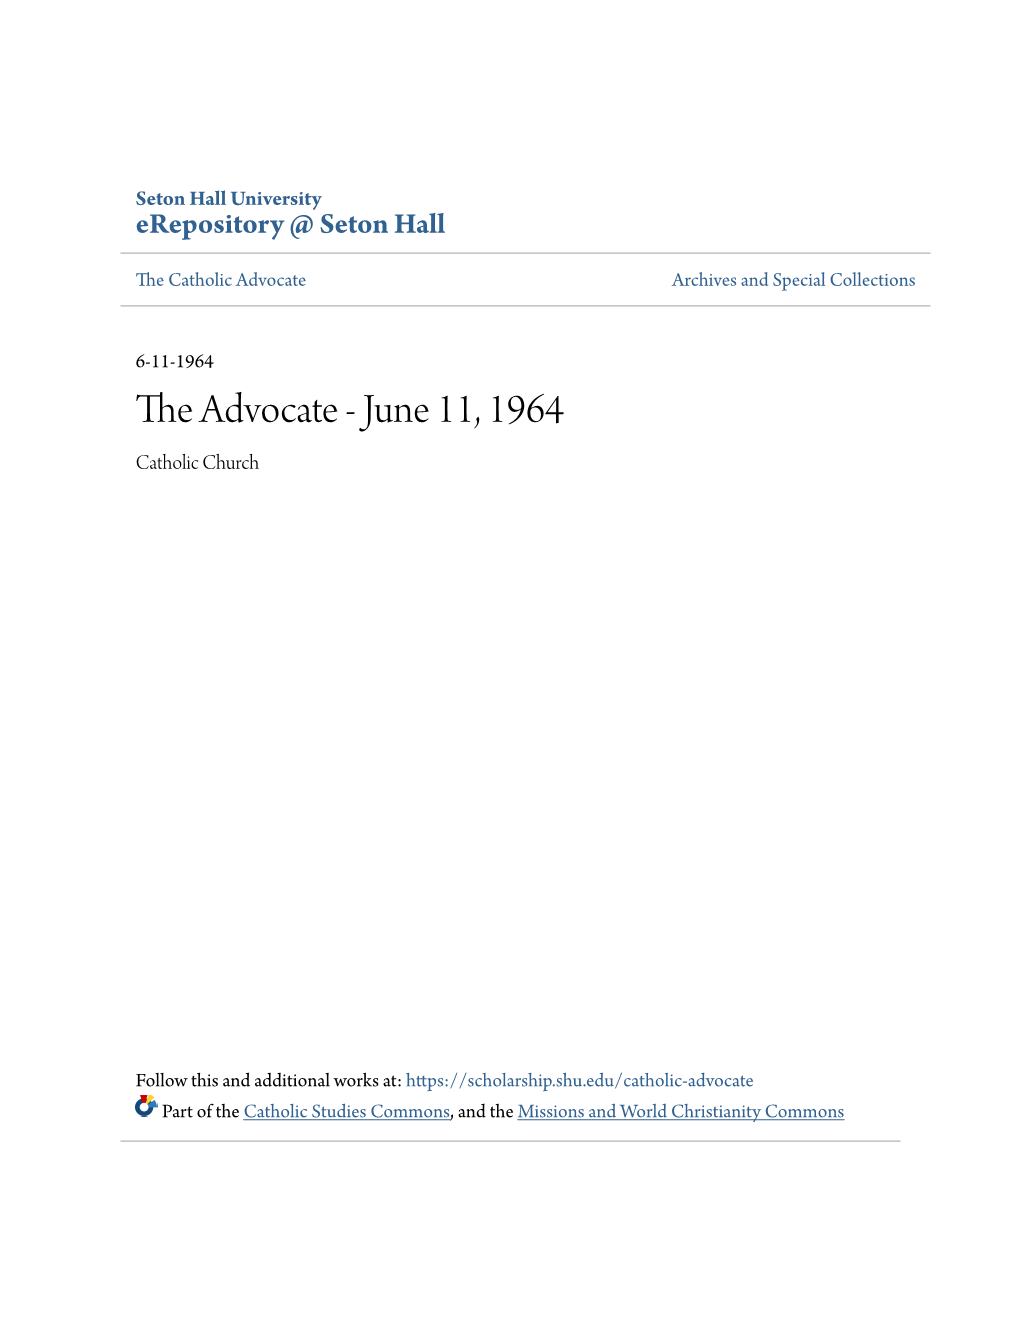 The Advocate - June 11, 1964 Catholic Church